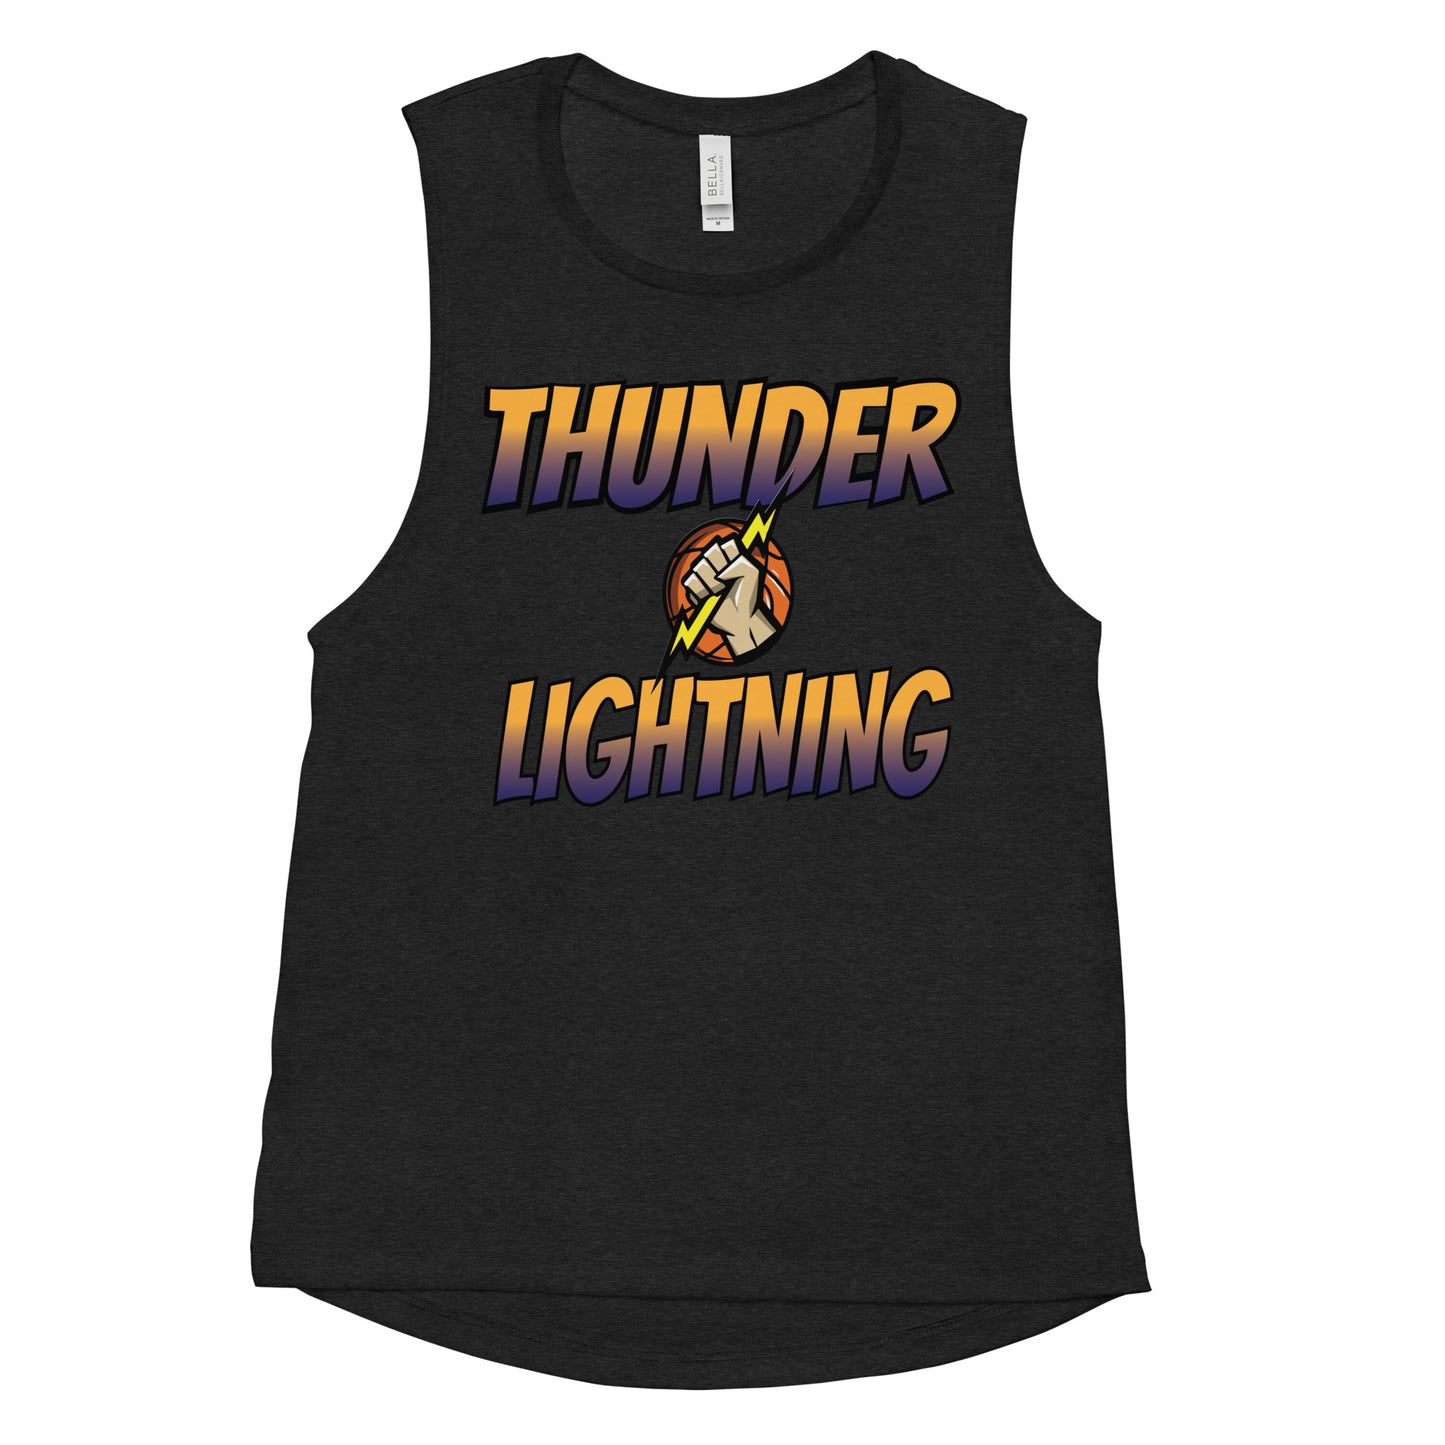 Thunder & Lightning Ladies’ Muscle Tank